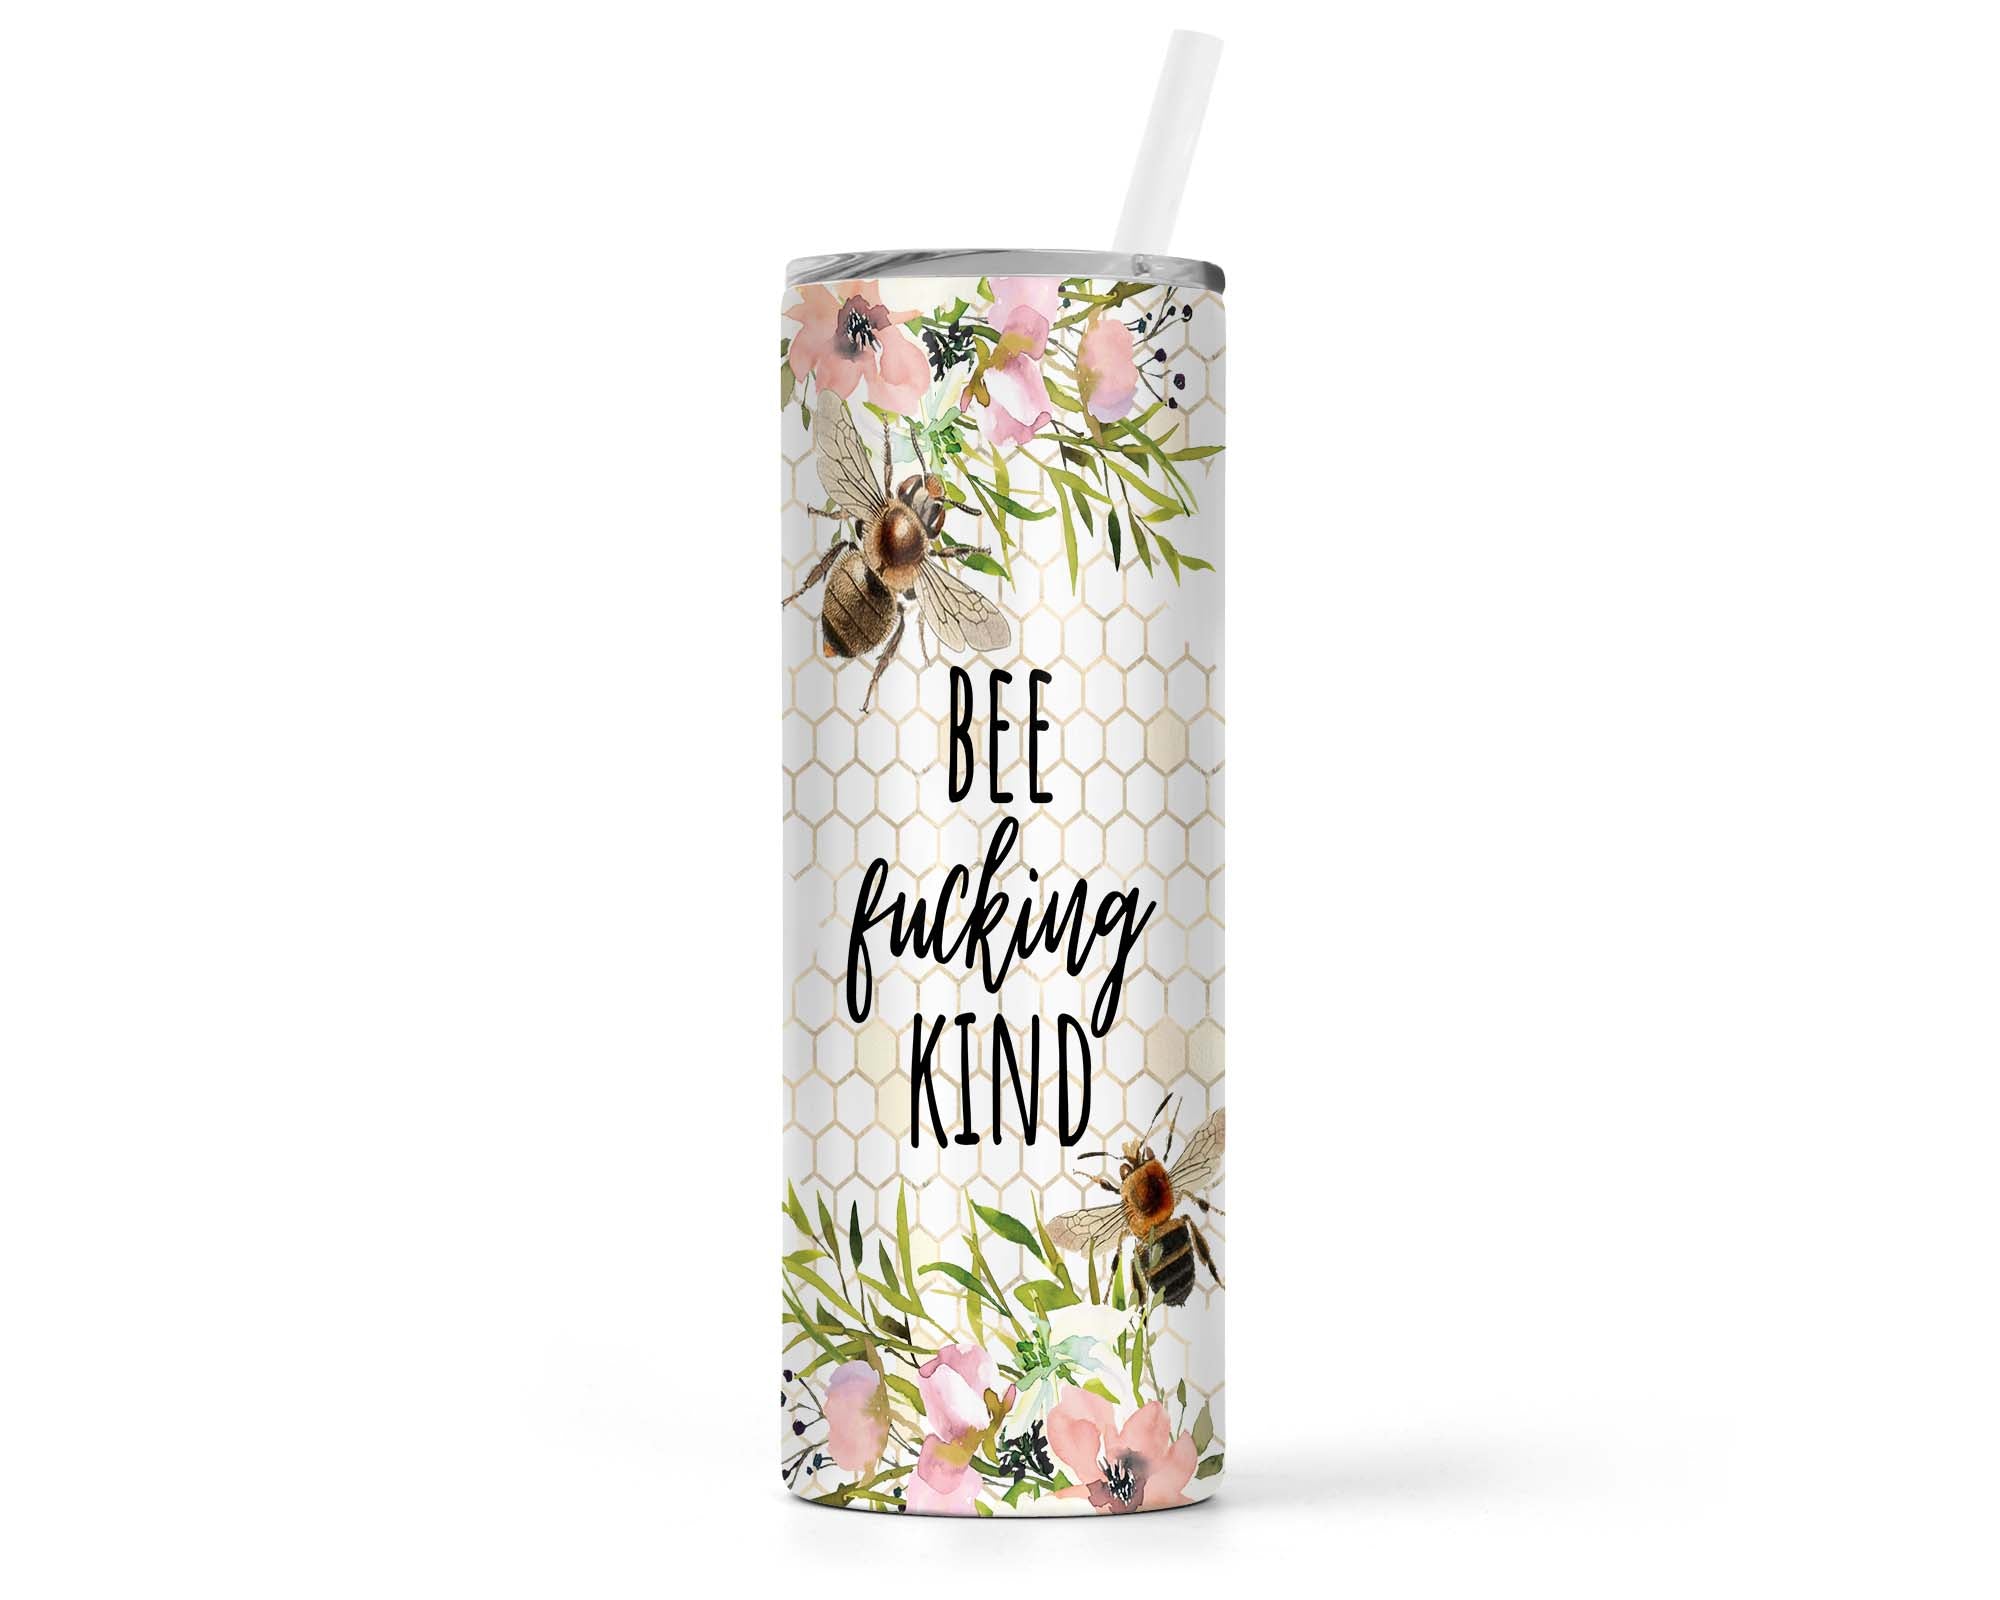 Bee Fucking Kind (OG) | Tumbler - The Pretty Things.ca